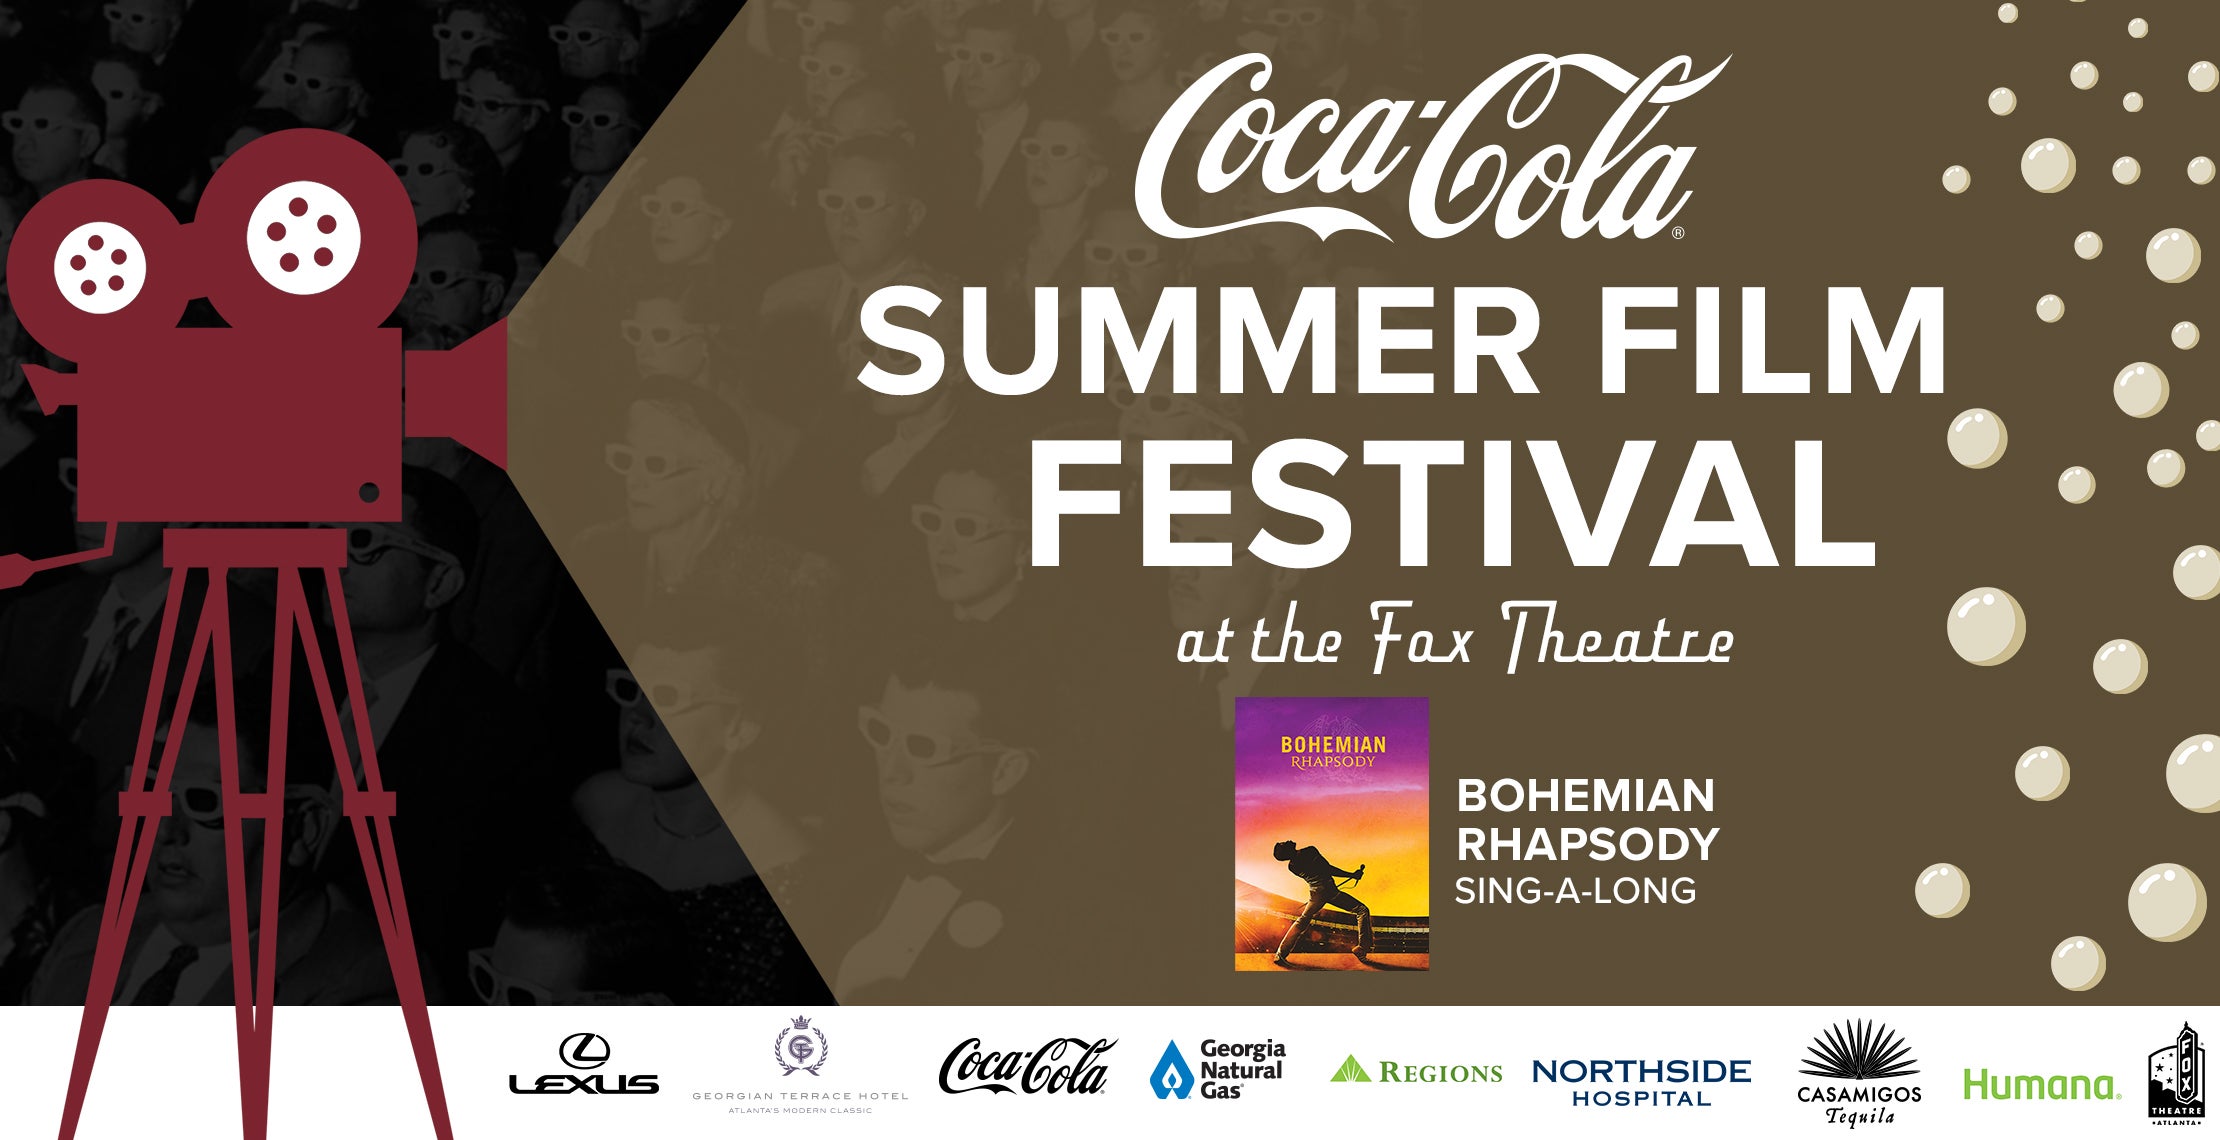 Coca-Cola Summer Film Festival: Bohemian Rhapsody Sing-Along